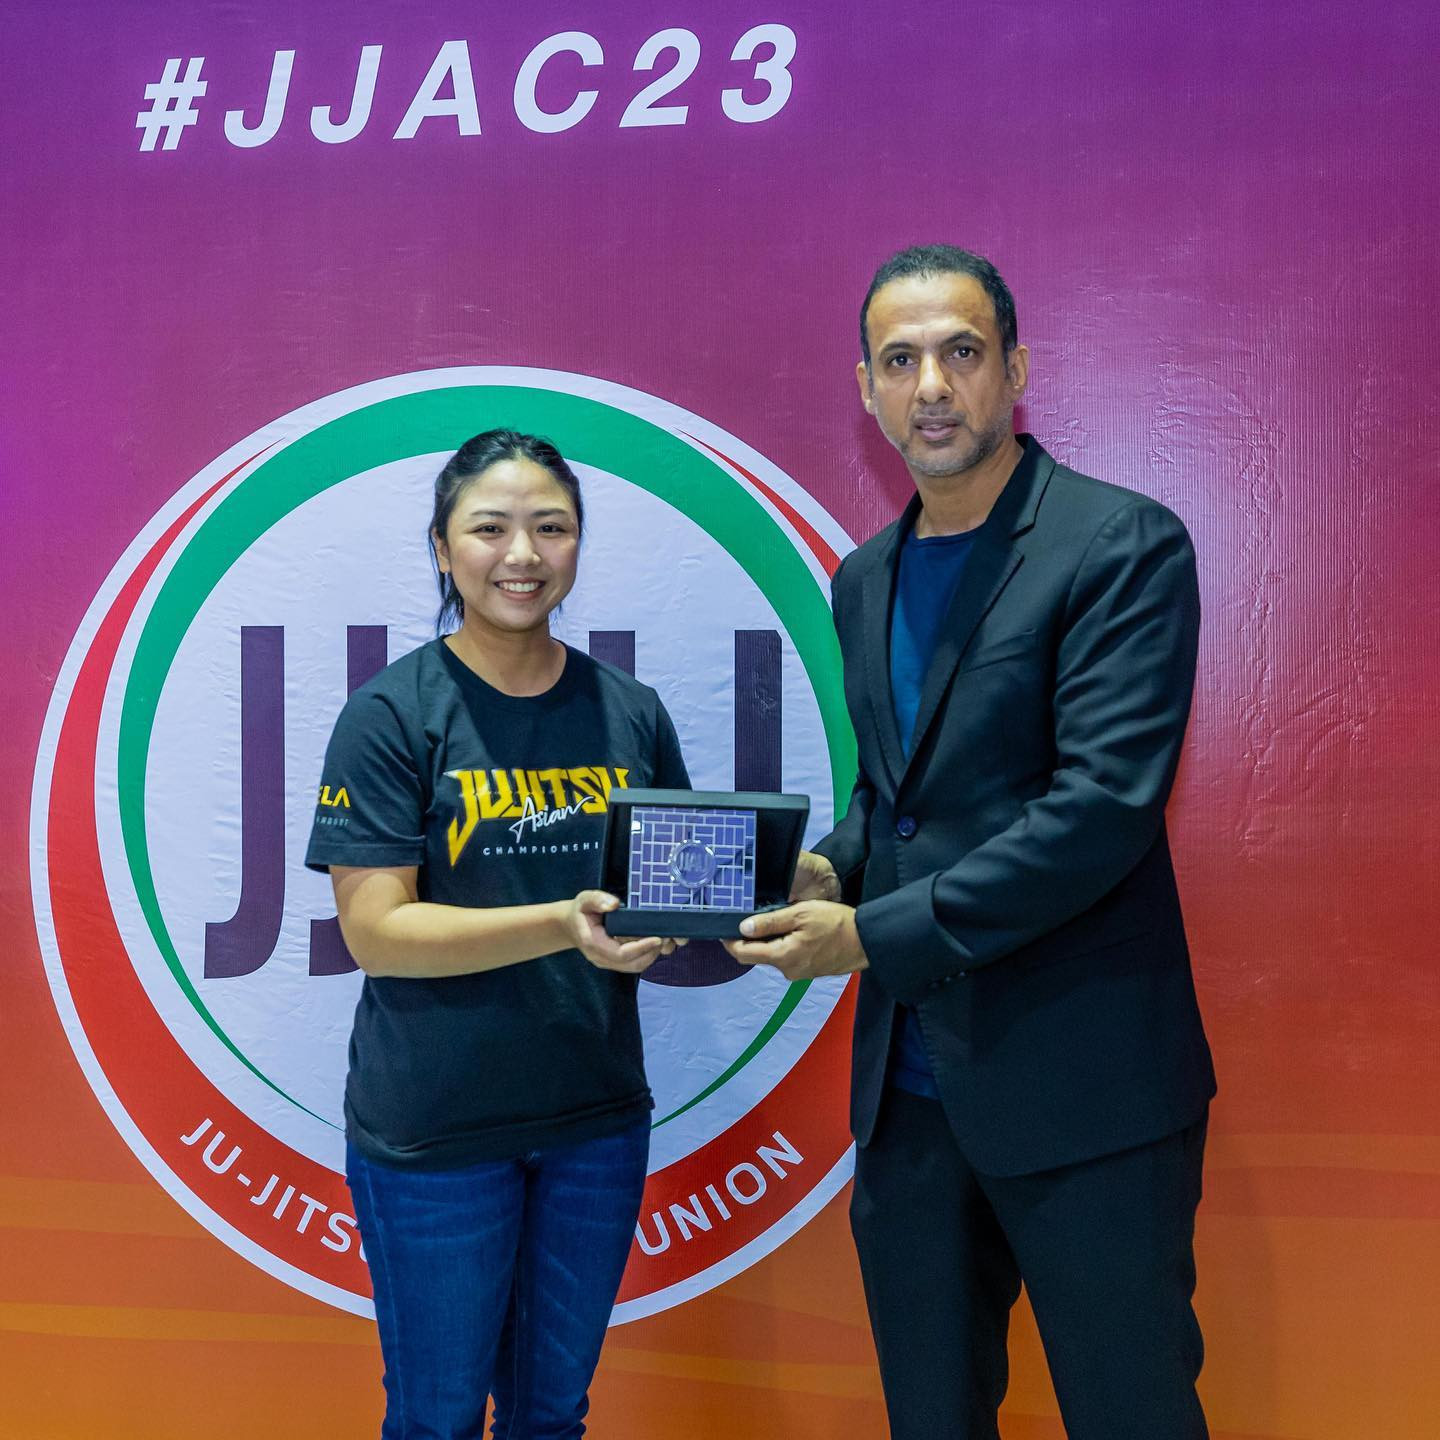 Ju-Jitsu Asian Union general secretary Fahad Al Shami, right, presented President of the Ju-Jitsu Association of Thailand Kunsatri Kumsroi with an award for the successful hosting of the competition ©JJAU